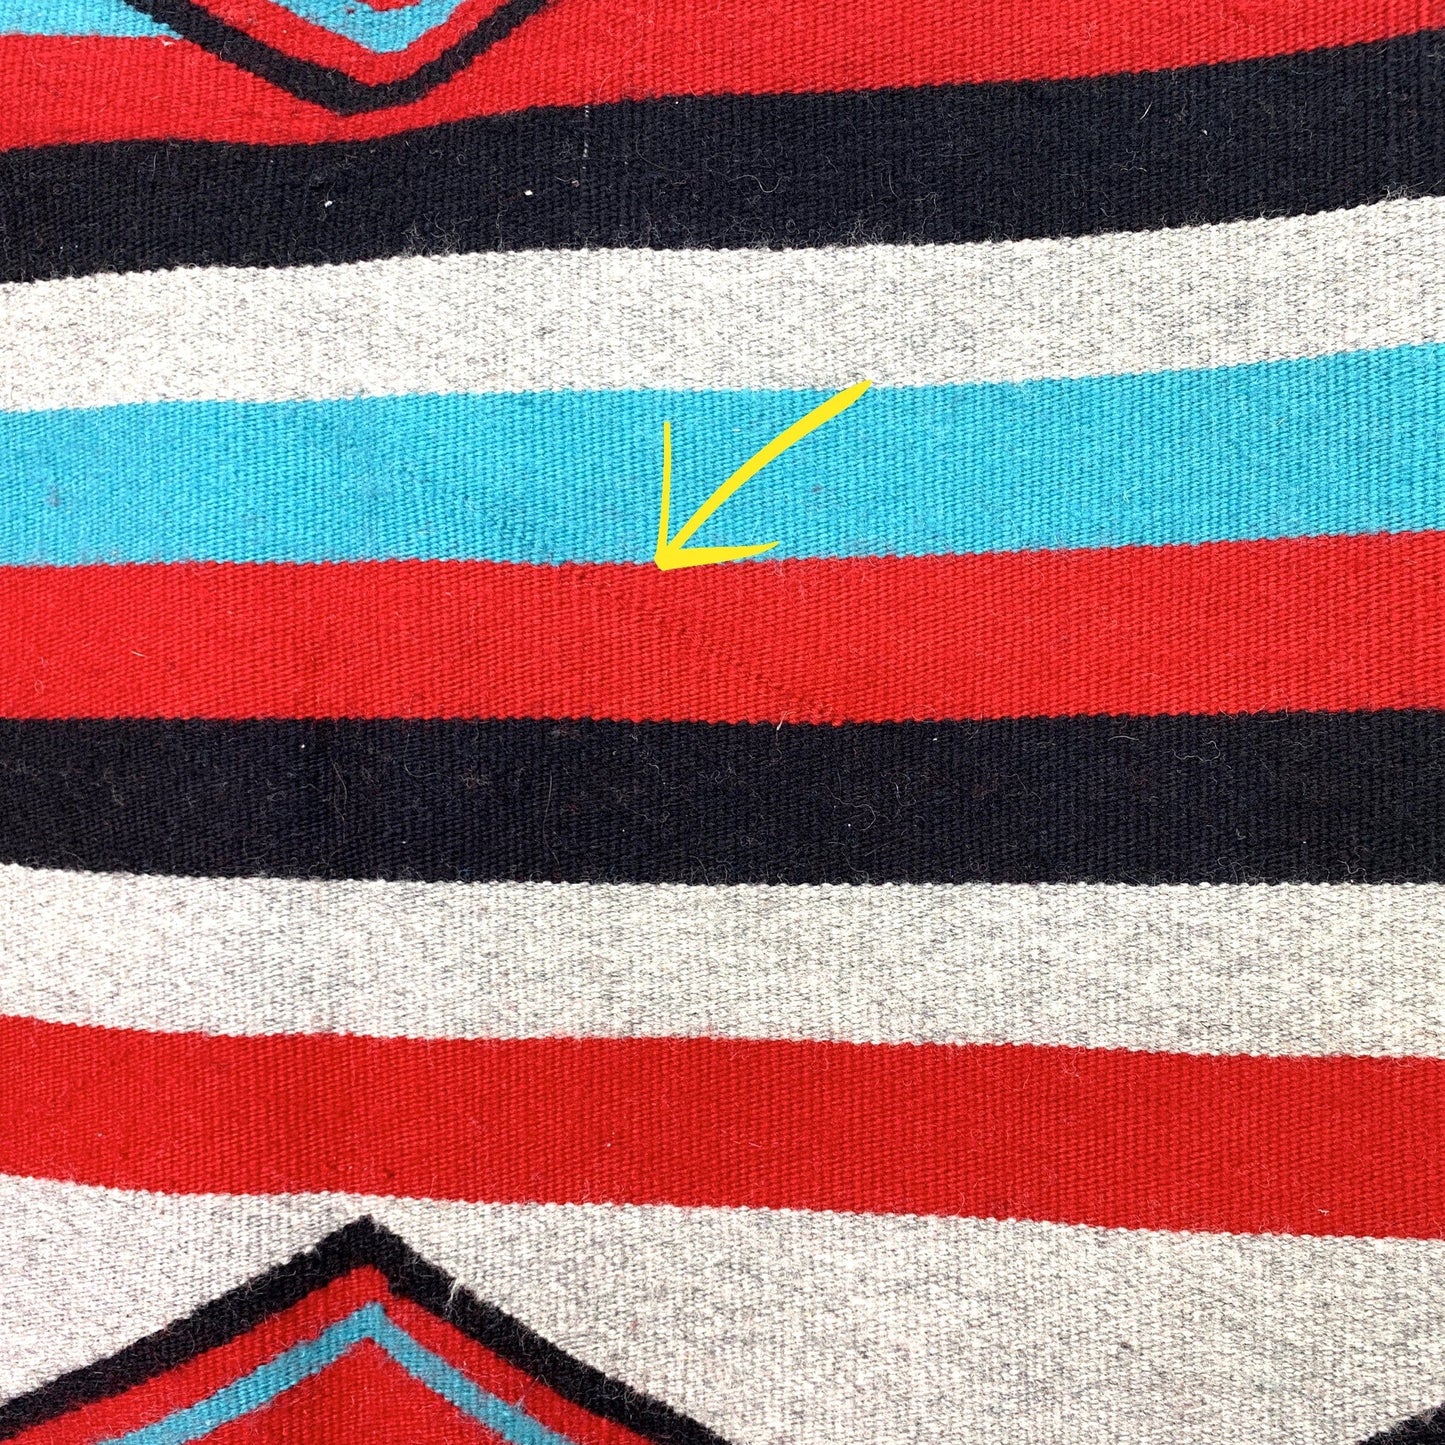 Vintage Navajo Hand-Woven Geometric Striped Kilim Rug by Lena Begay 42” x 27.5”